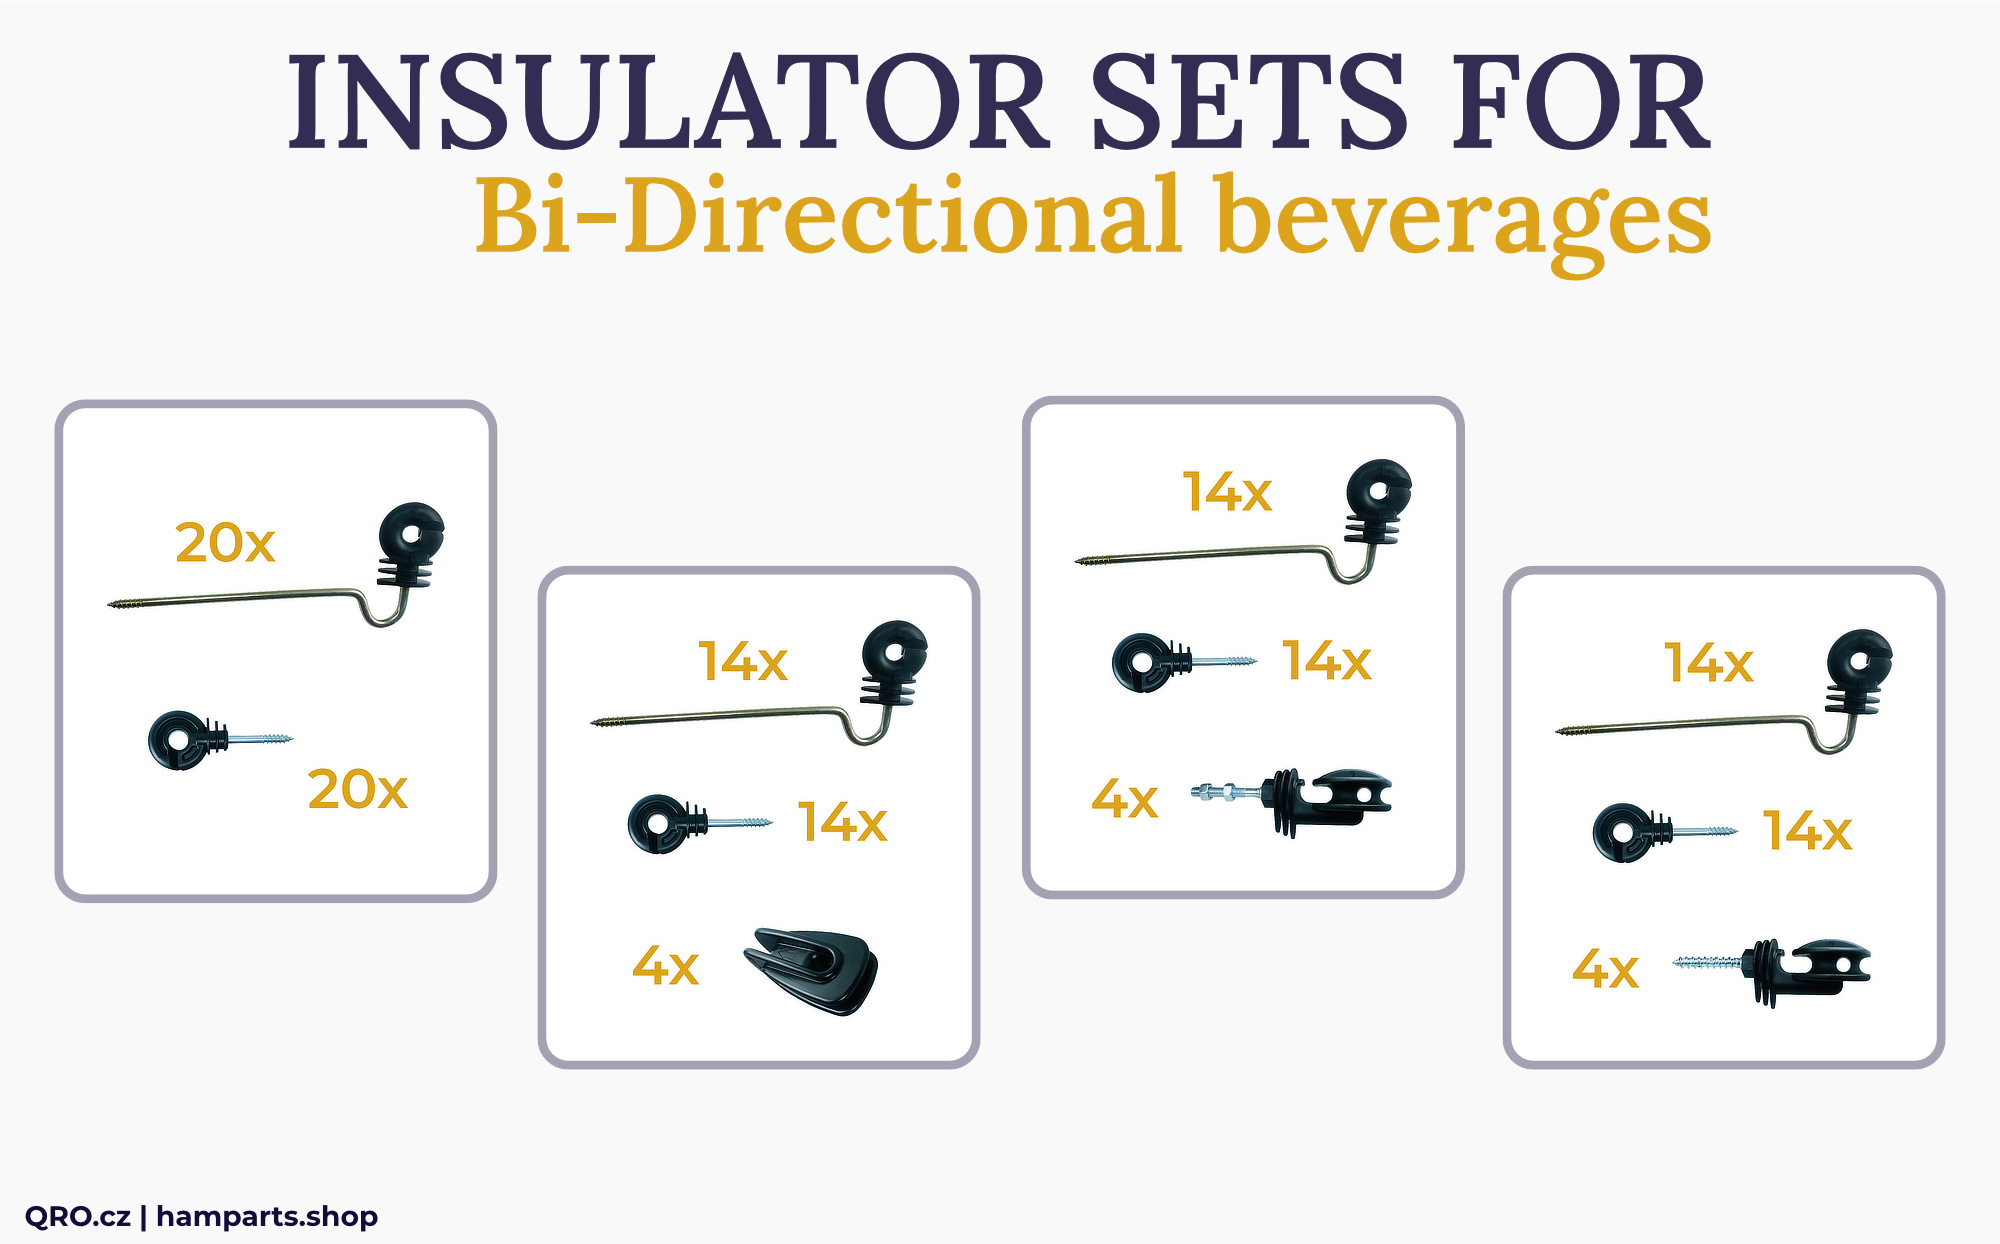 bi-directional beverage insulator set by qro.cz hampart.shop